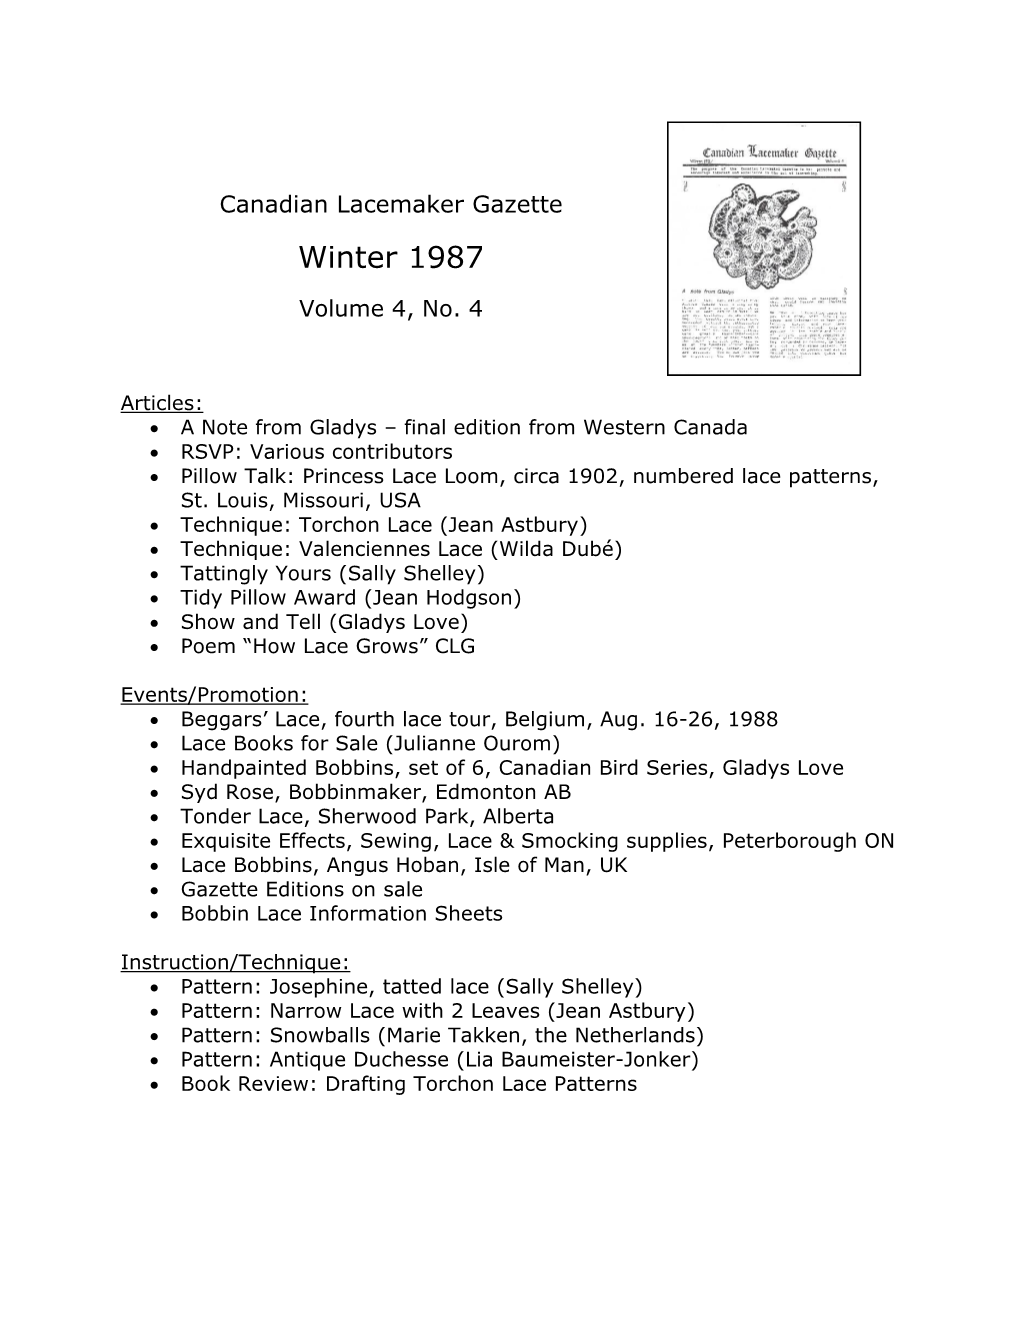 Canadian Lacemaker Gazette Winter 1987